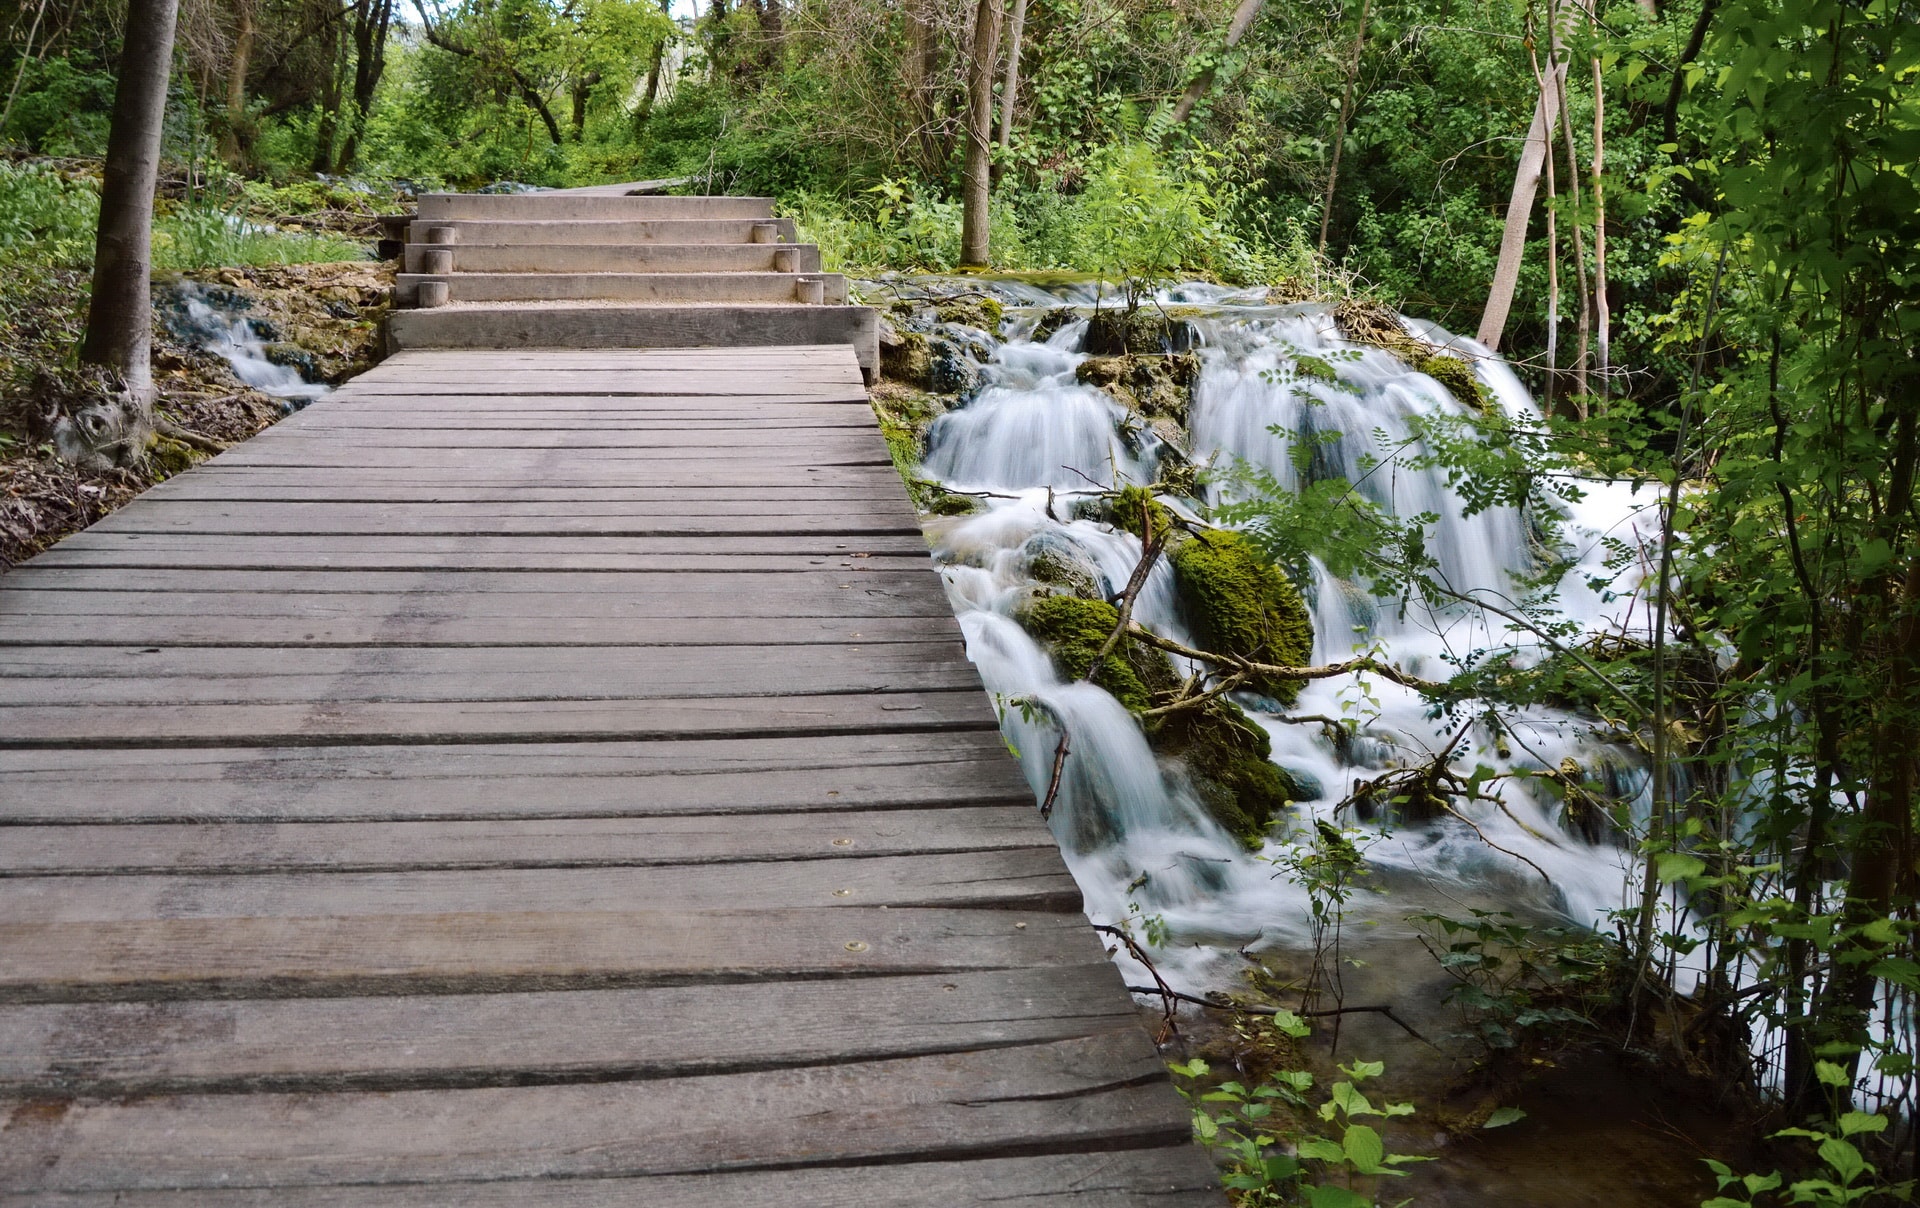 The wooden bridges in Krka take visitors through beatiful nature